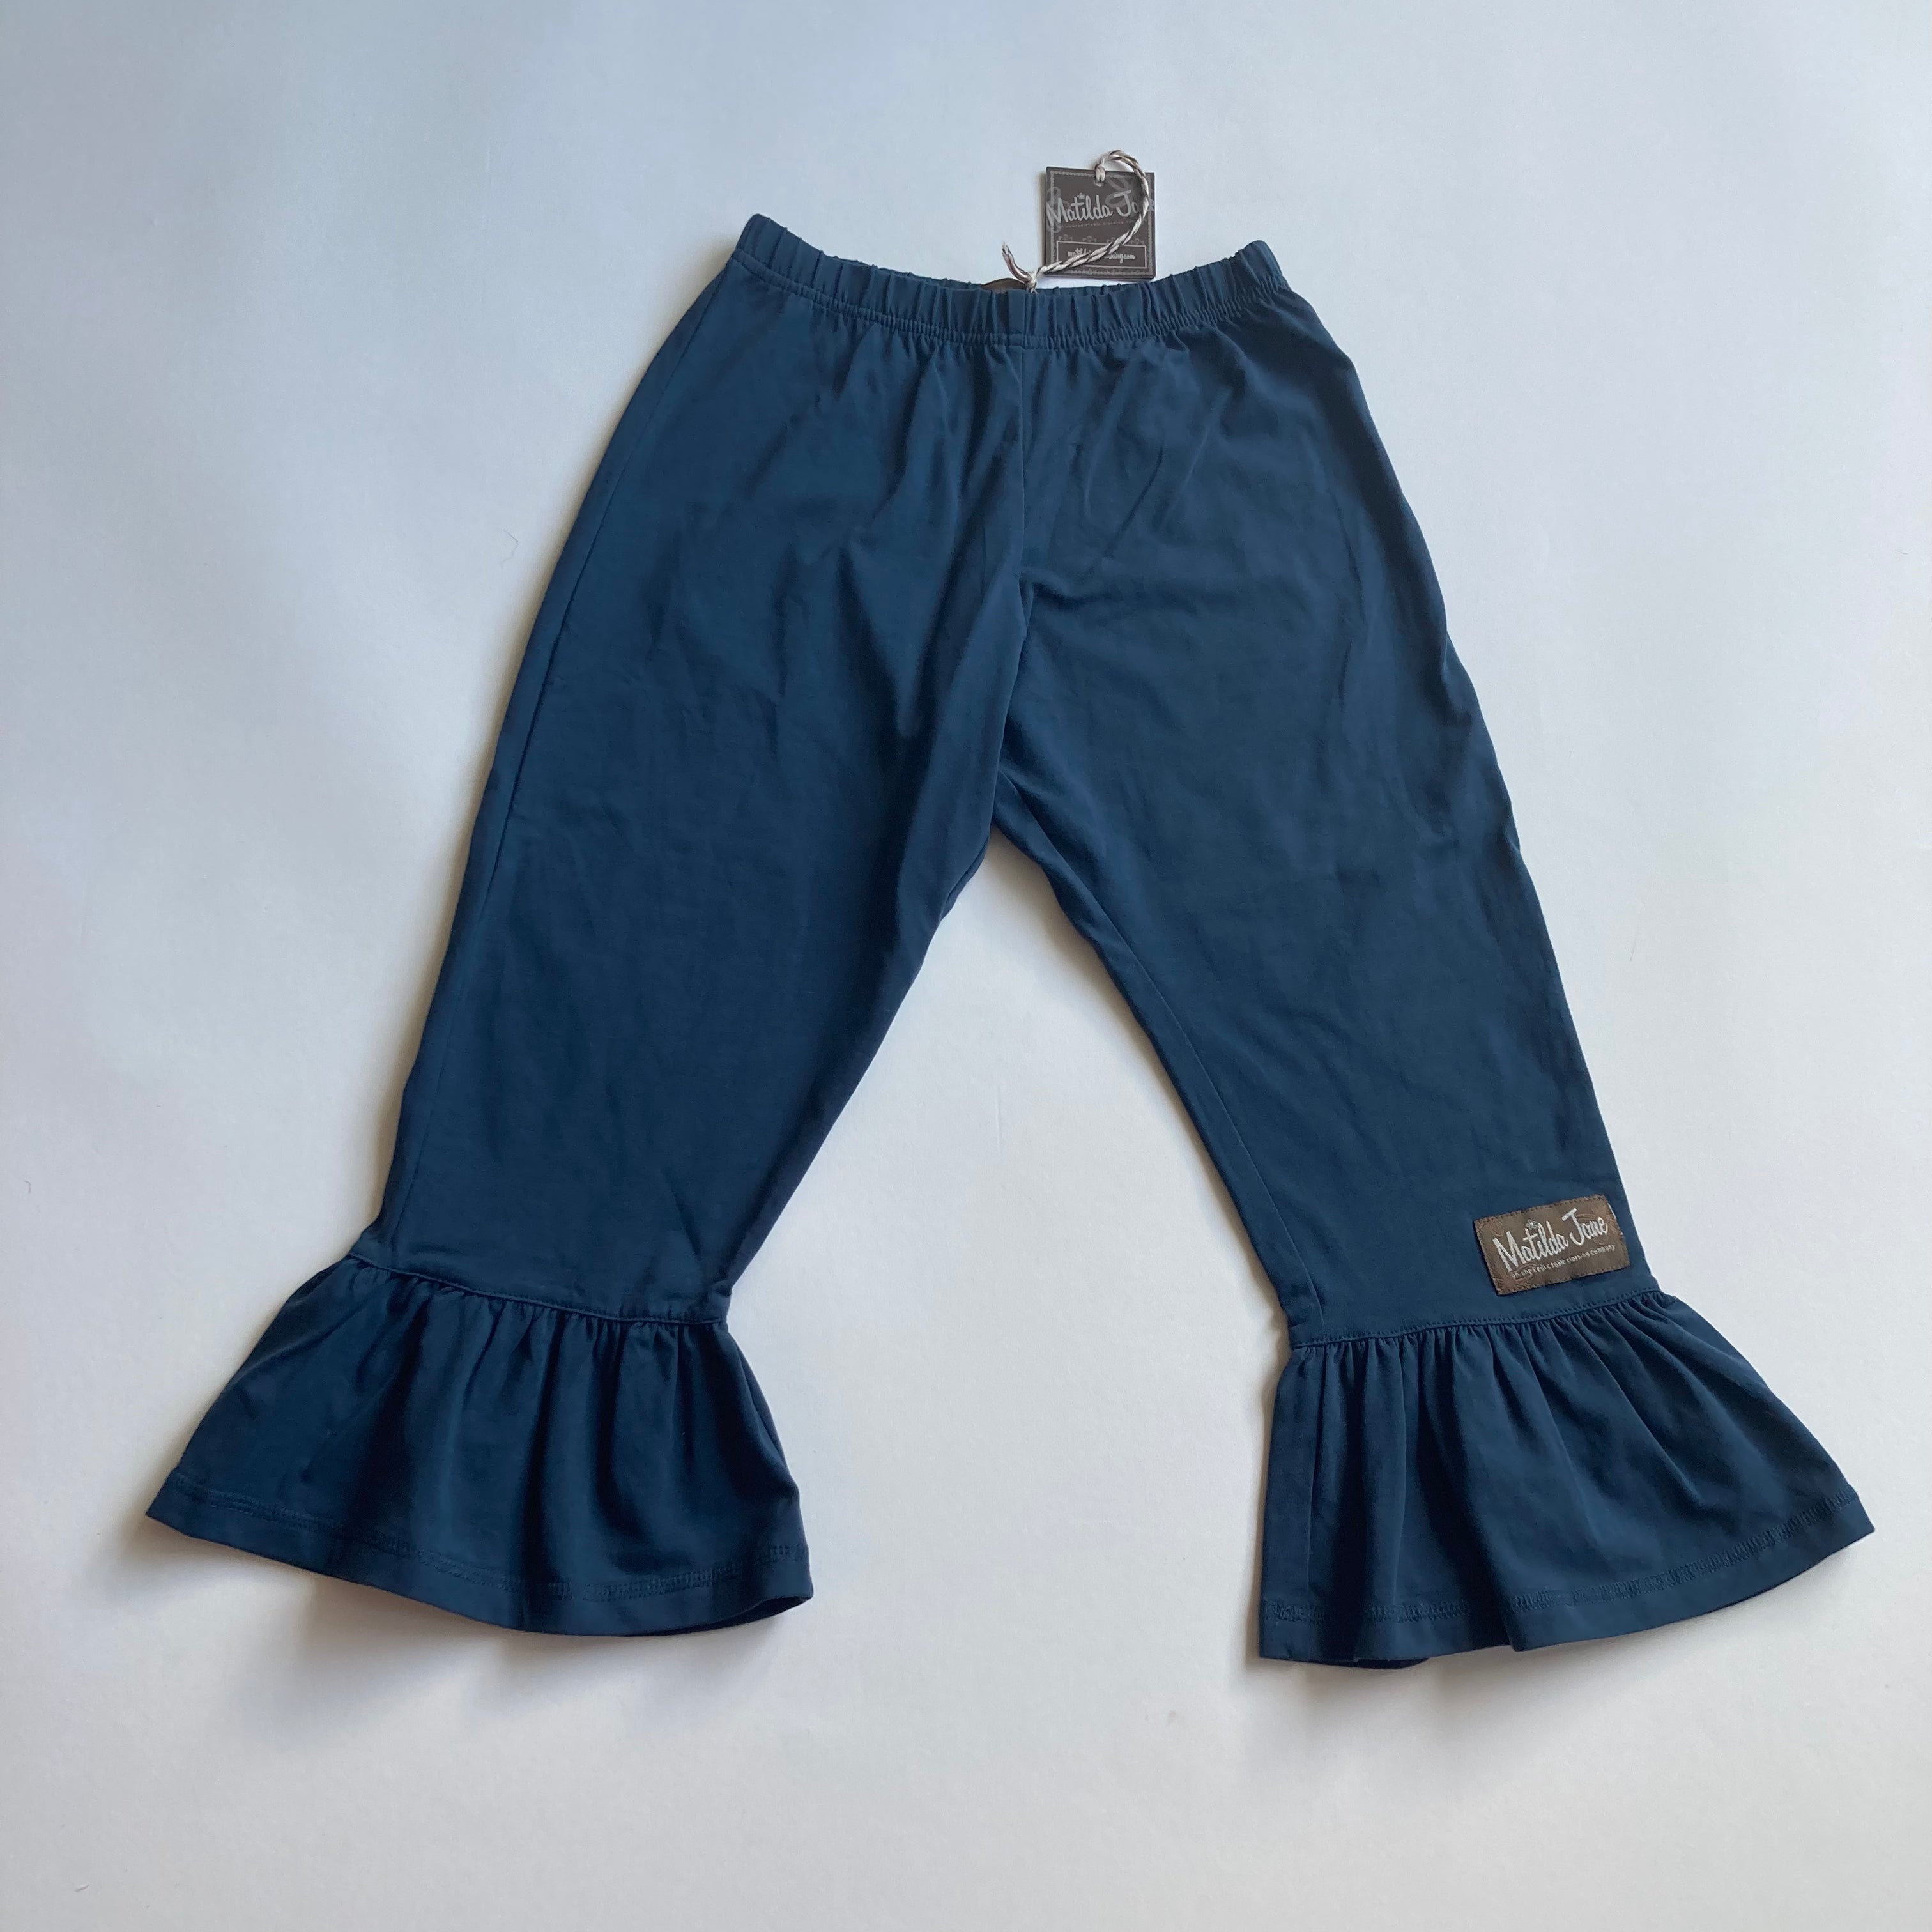 New “Matilda Jane” Capri Pants Size 10 With Tag